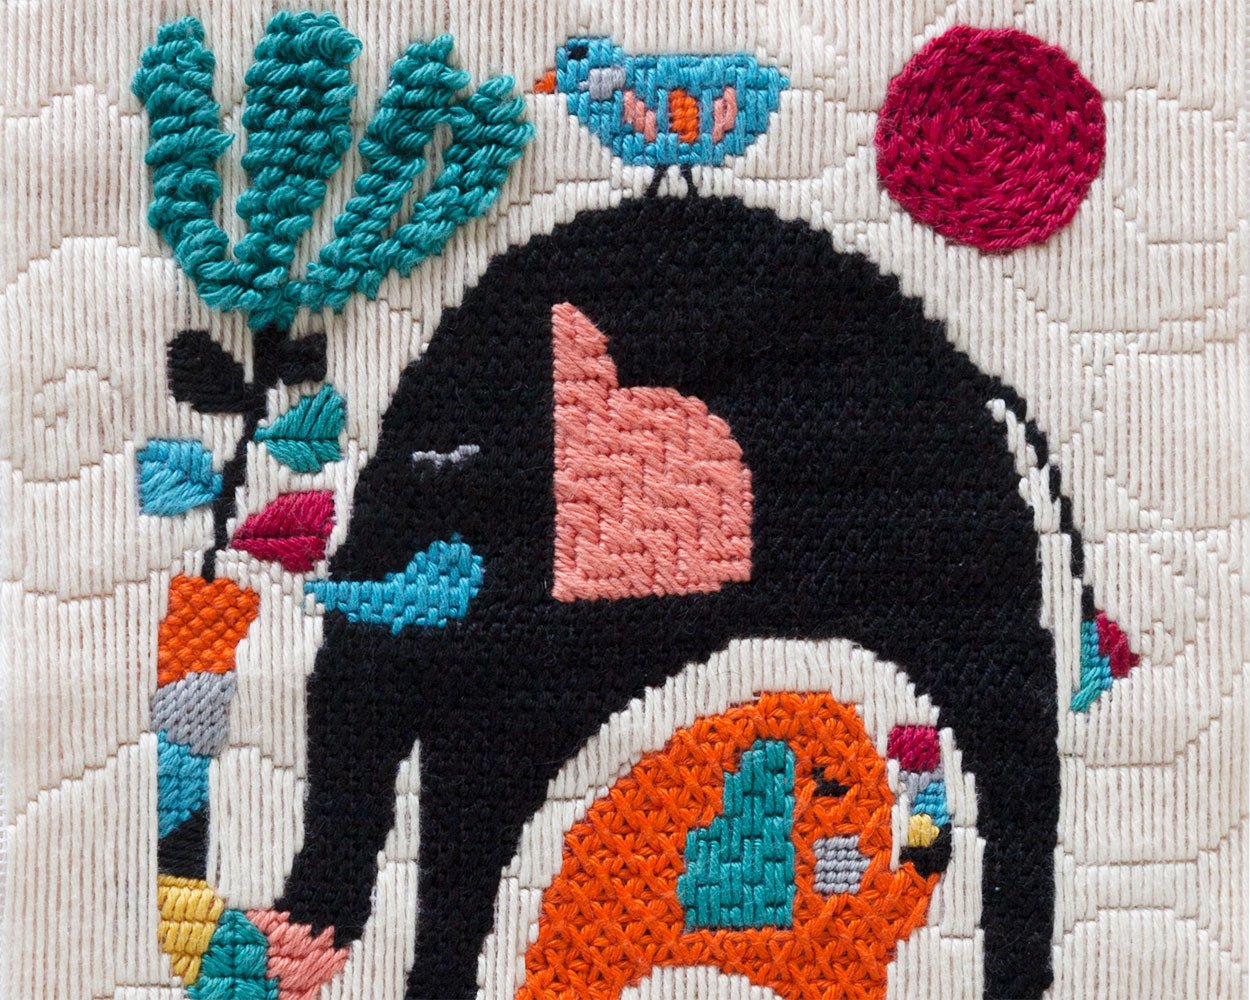 Needlepoint stitched piece with illustration of elephants